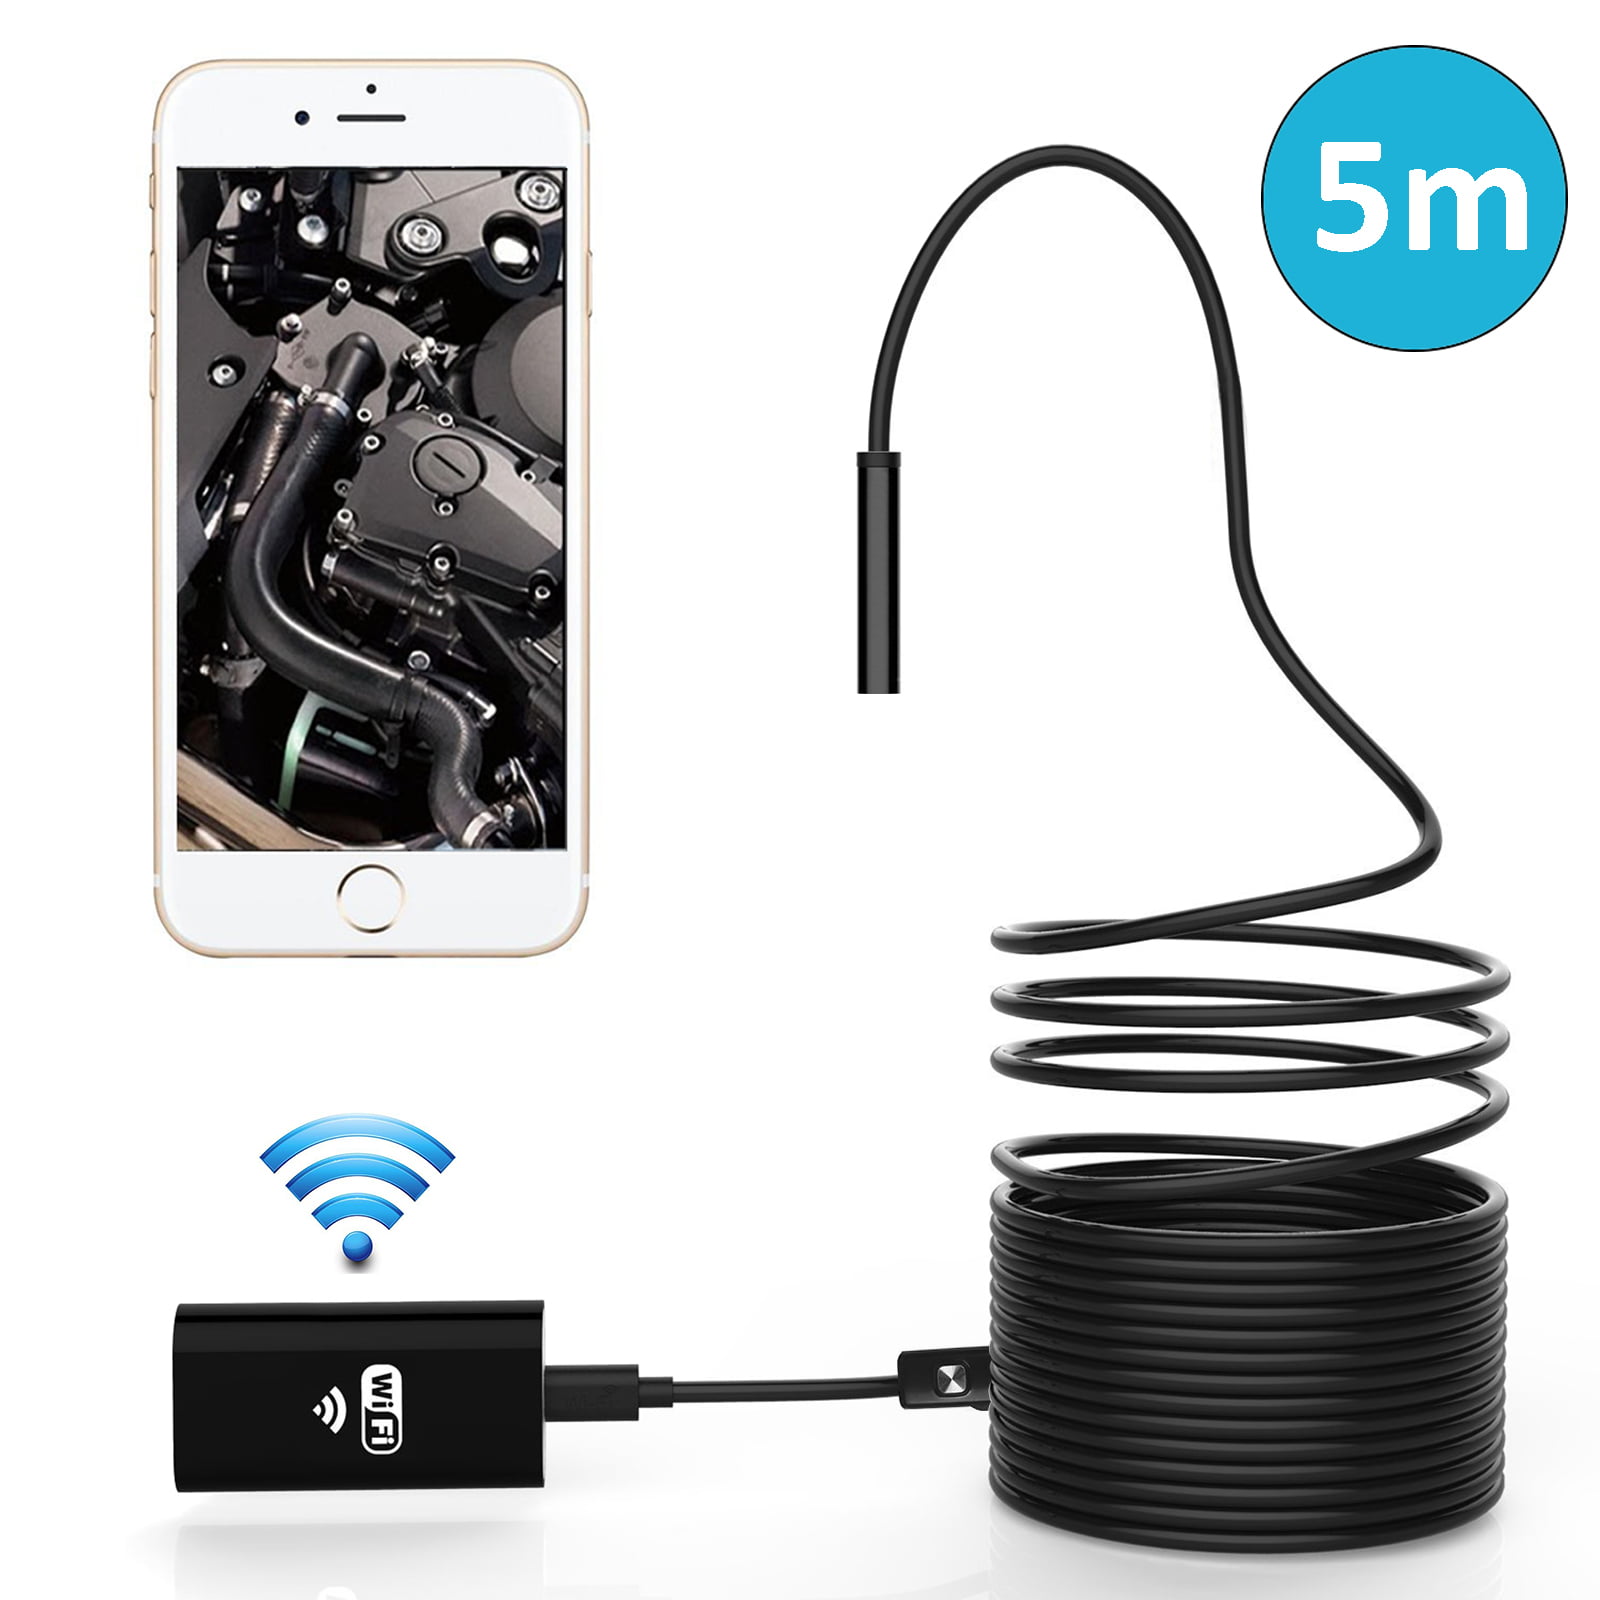 5M LED Wireless Endoscope WiFi Borescope Inspection Camera for iOS Android Windo 